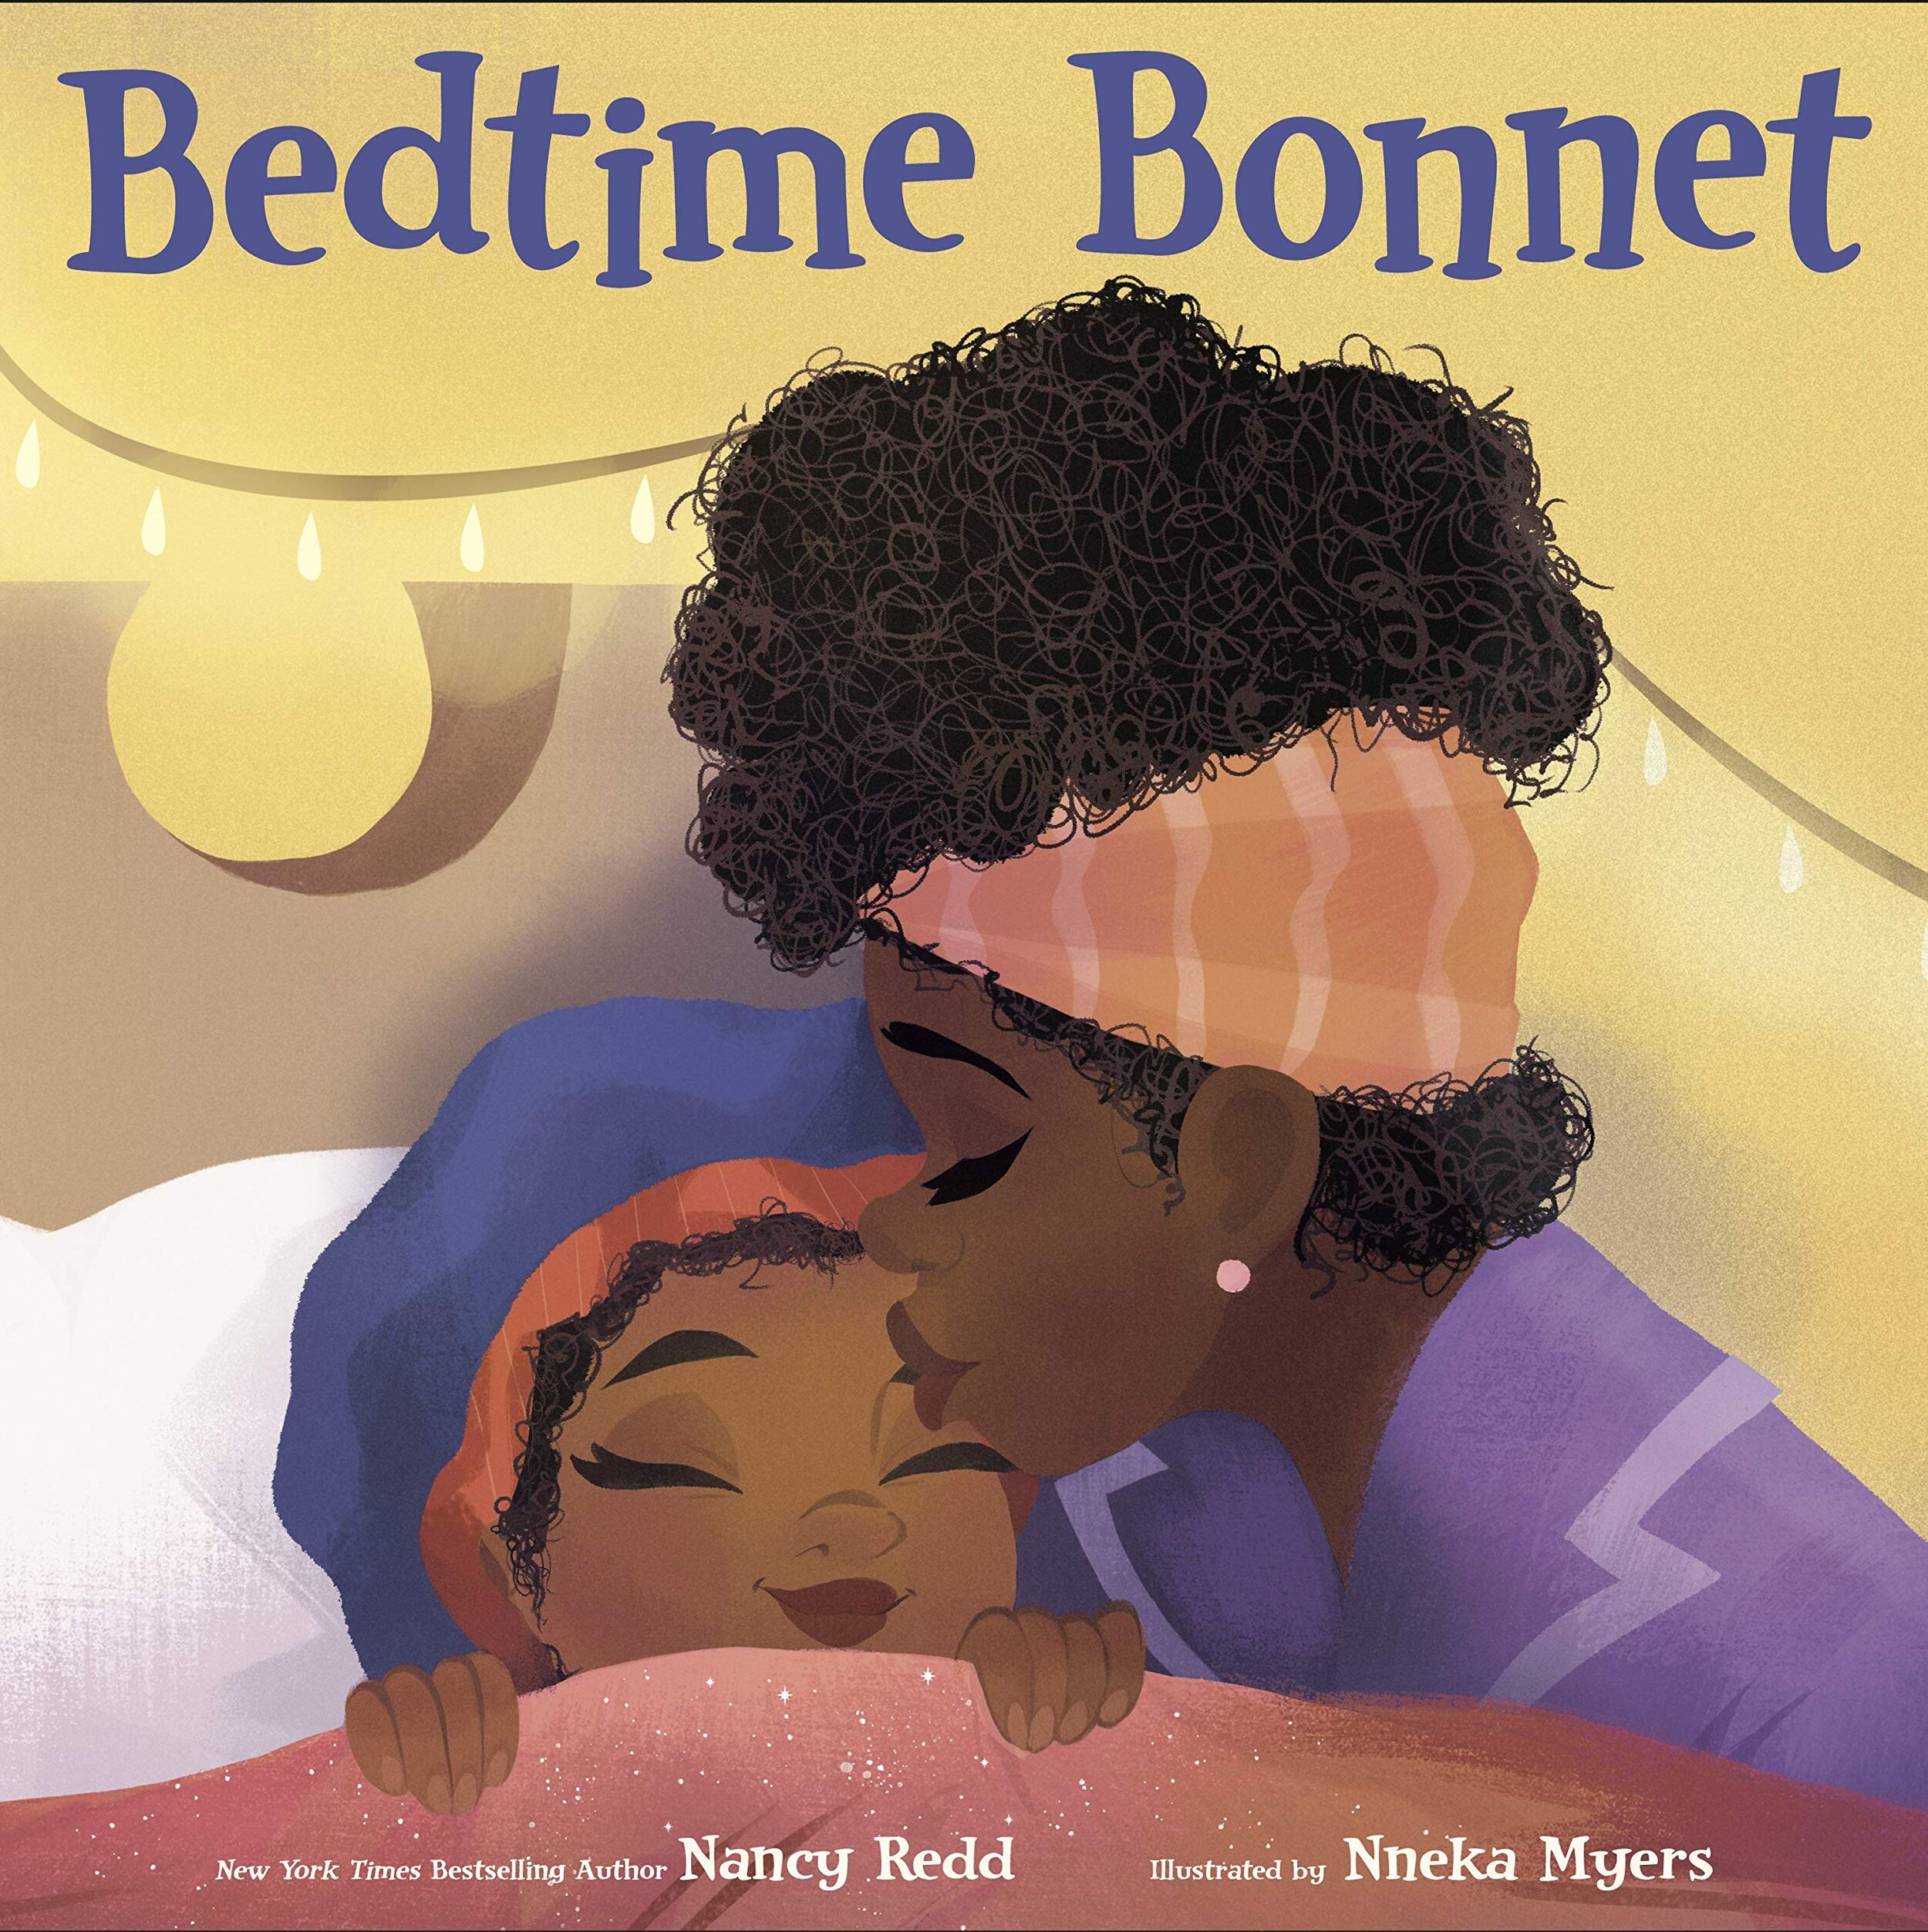 book-bedtimebonnet.jpg